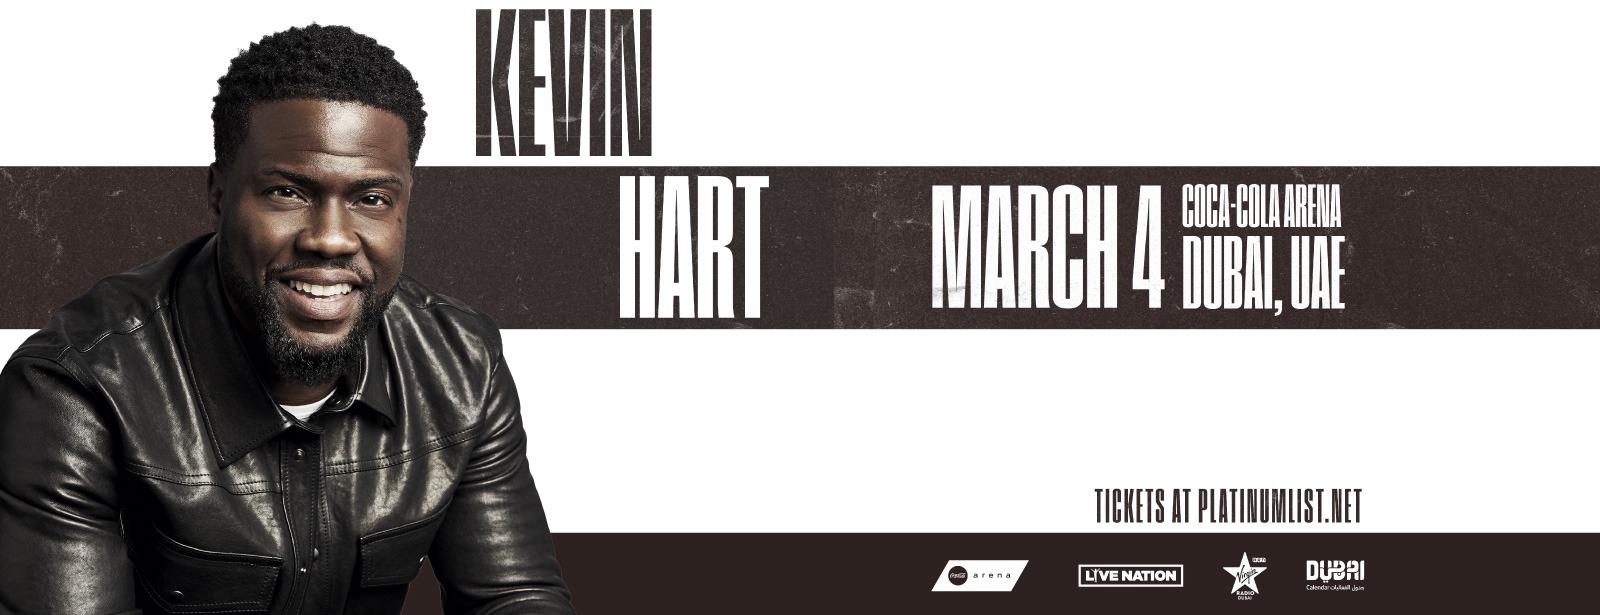 Kevin Hart Live in Coca-Cola Arena, Dubai - Coming Soon in UAE